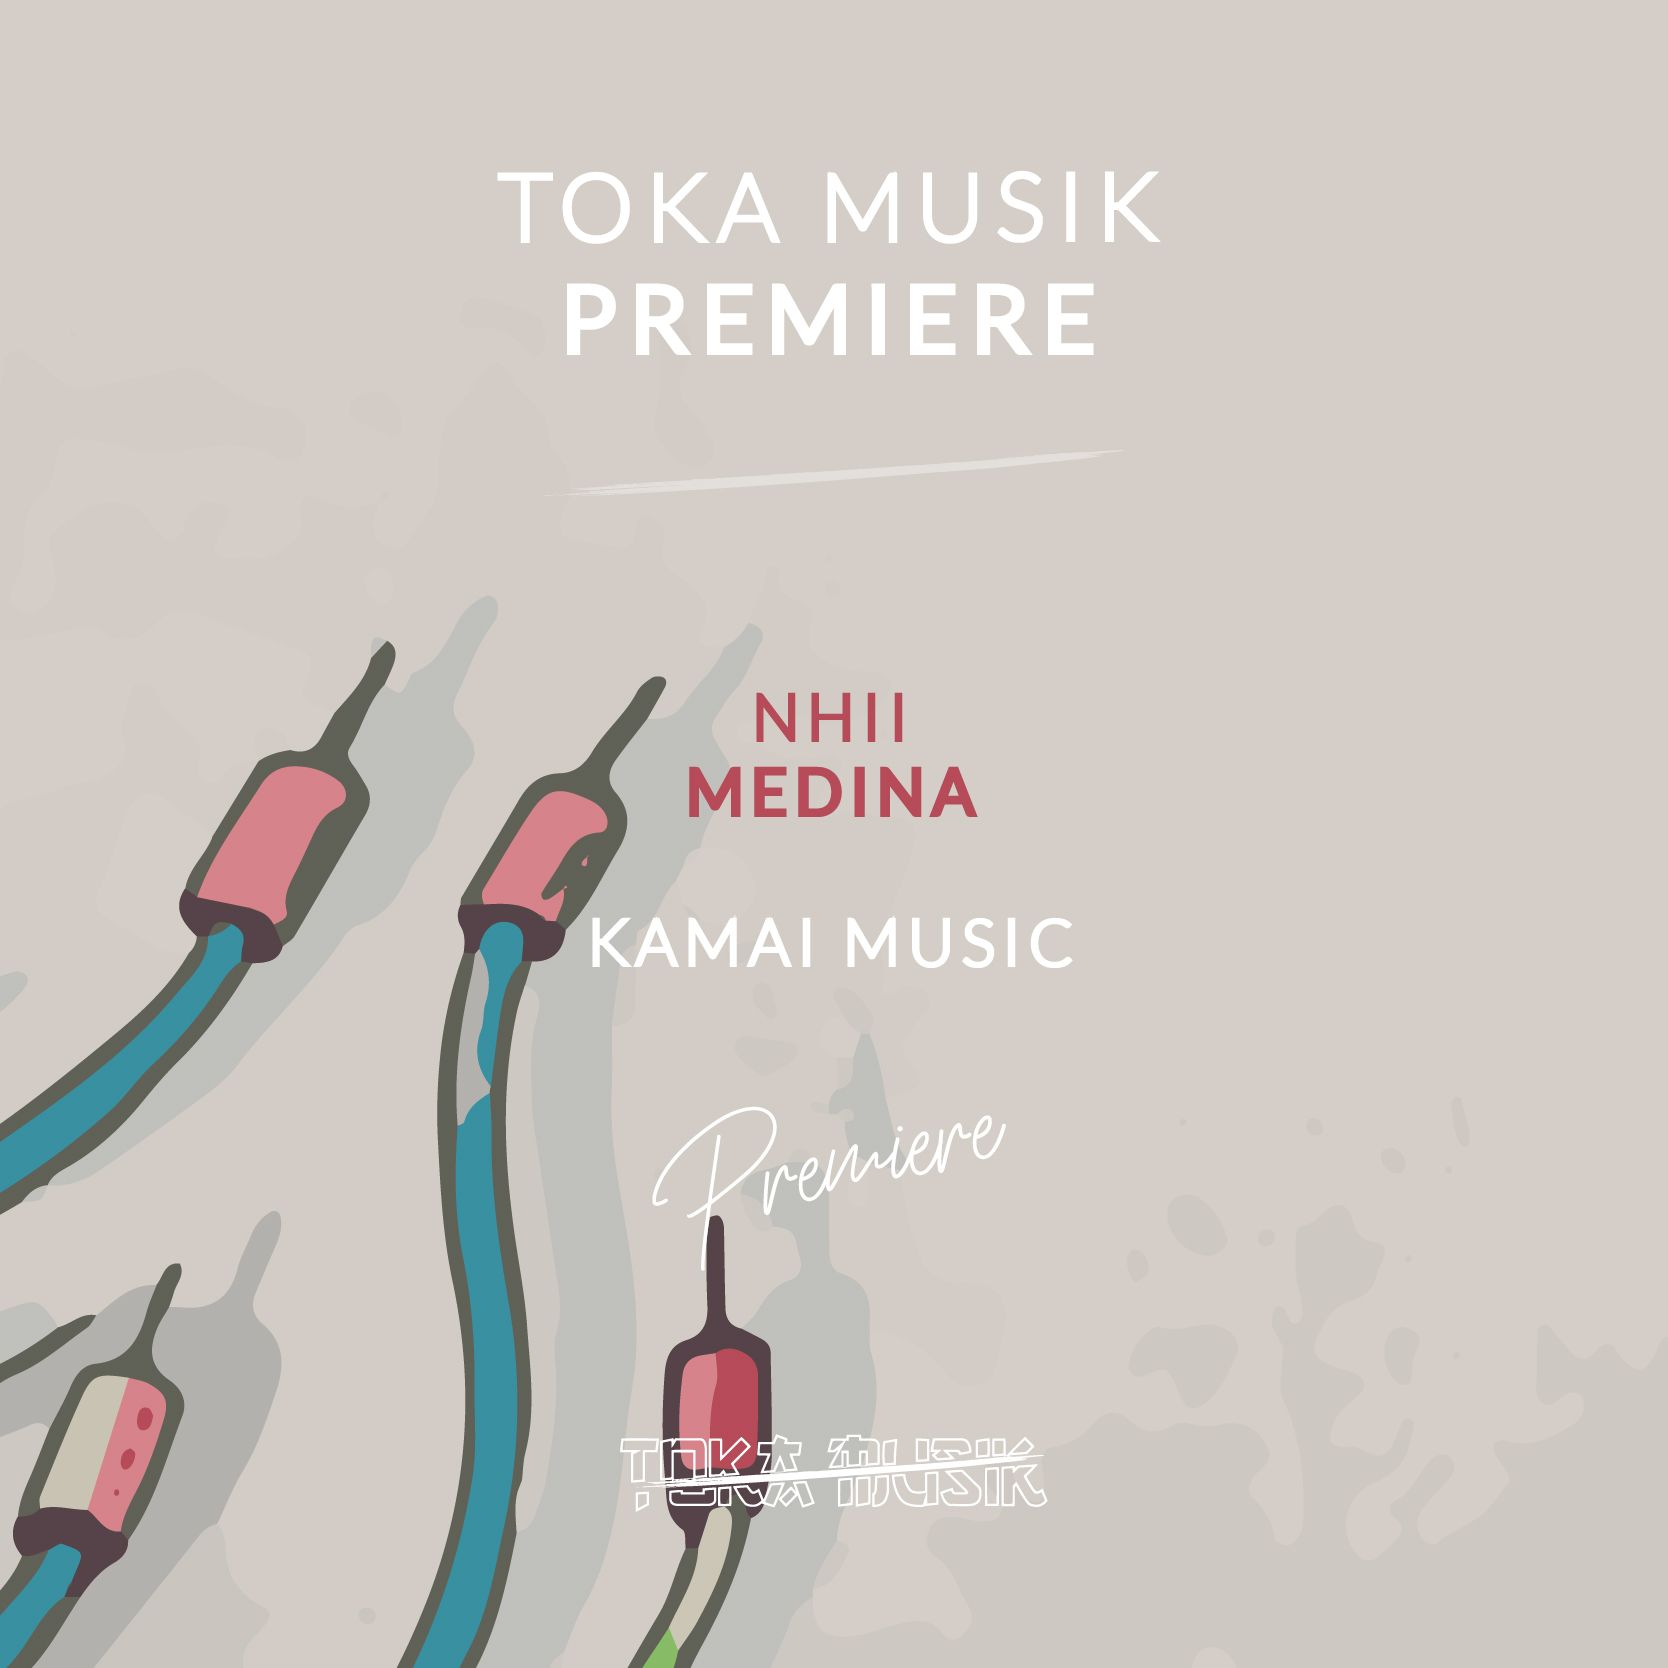 I-download PREMIERE: Nhii - Medina [Kamai Music]